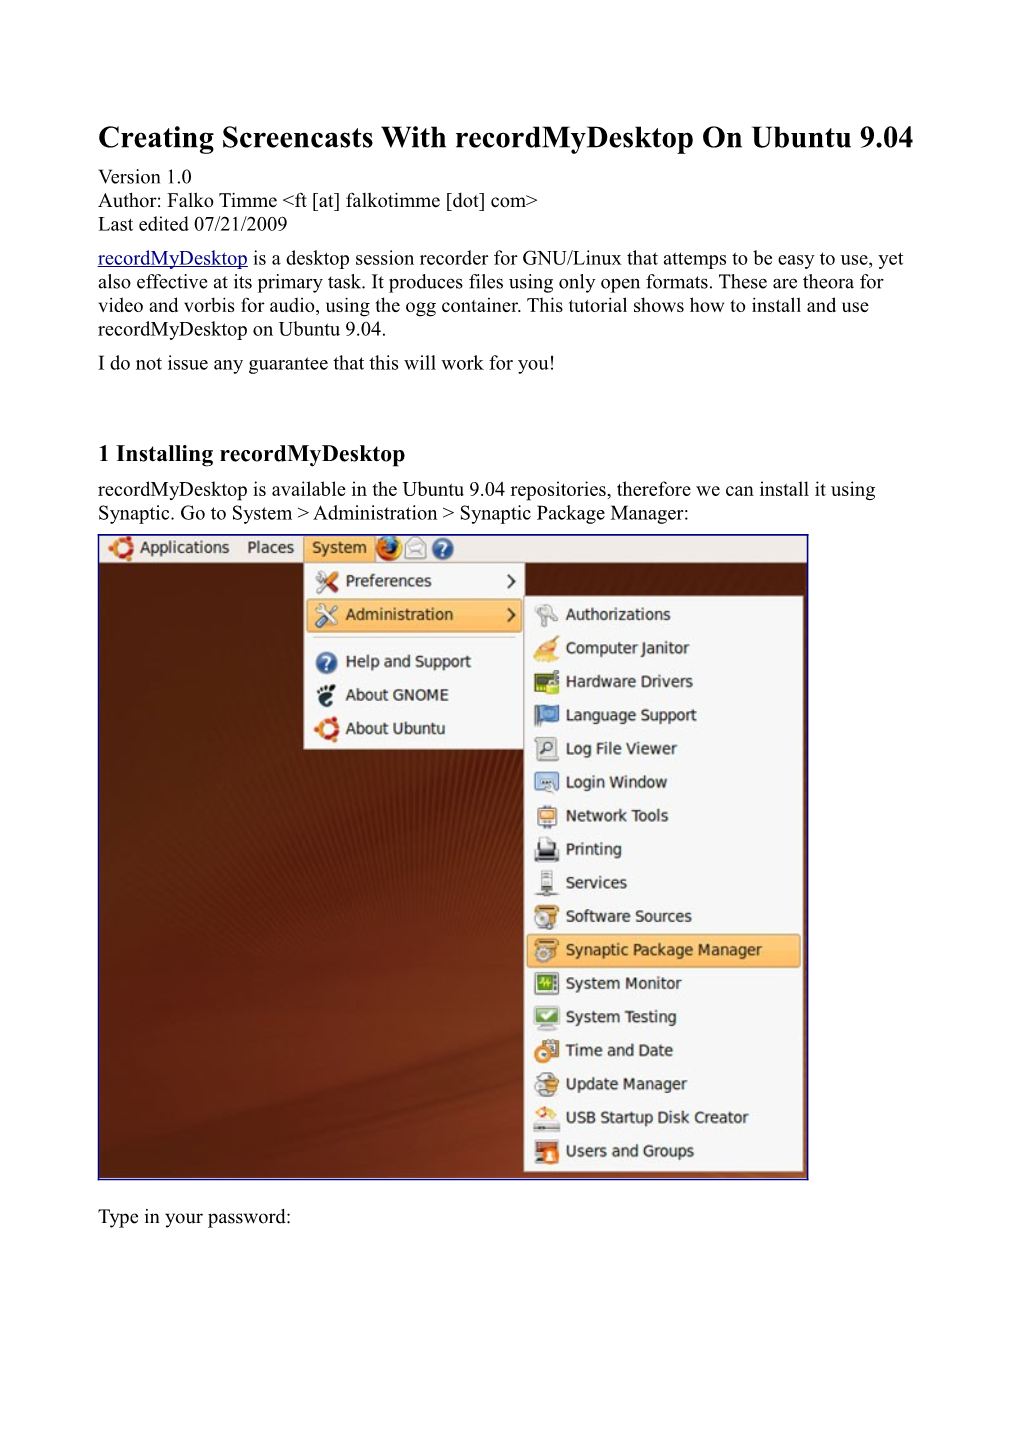 Creating Screencasts with Recordmydesktop on Ubuntu 9.04